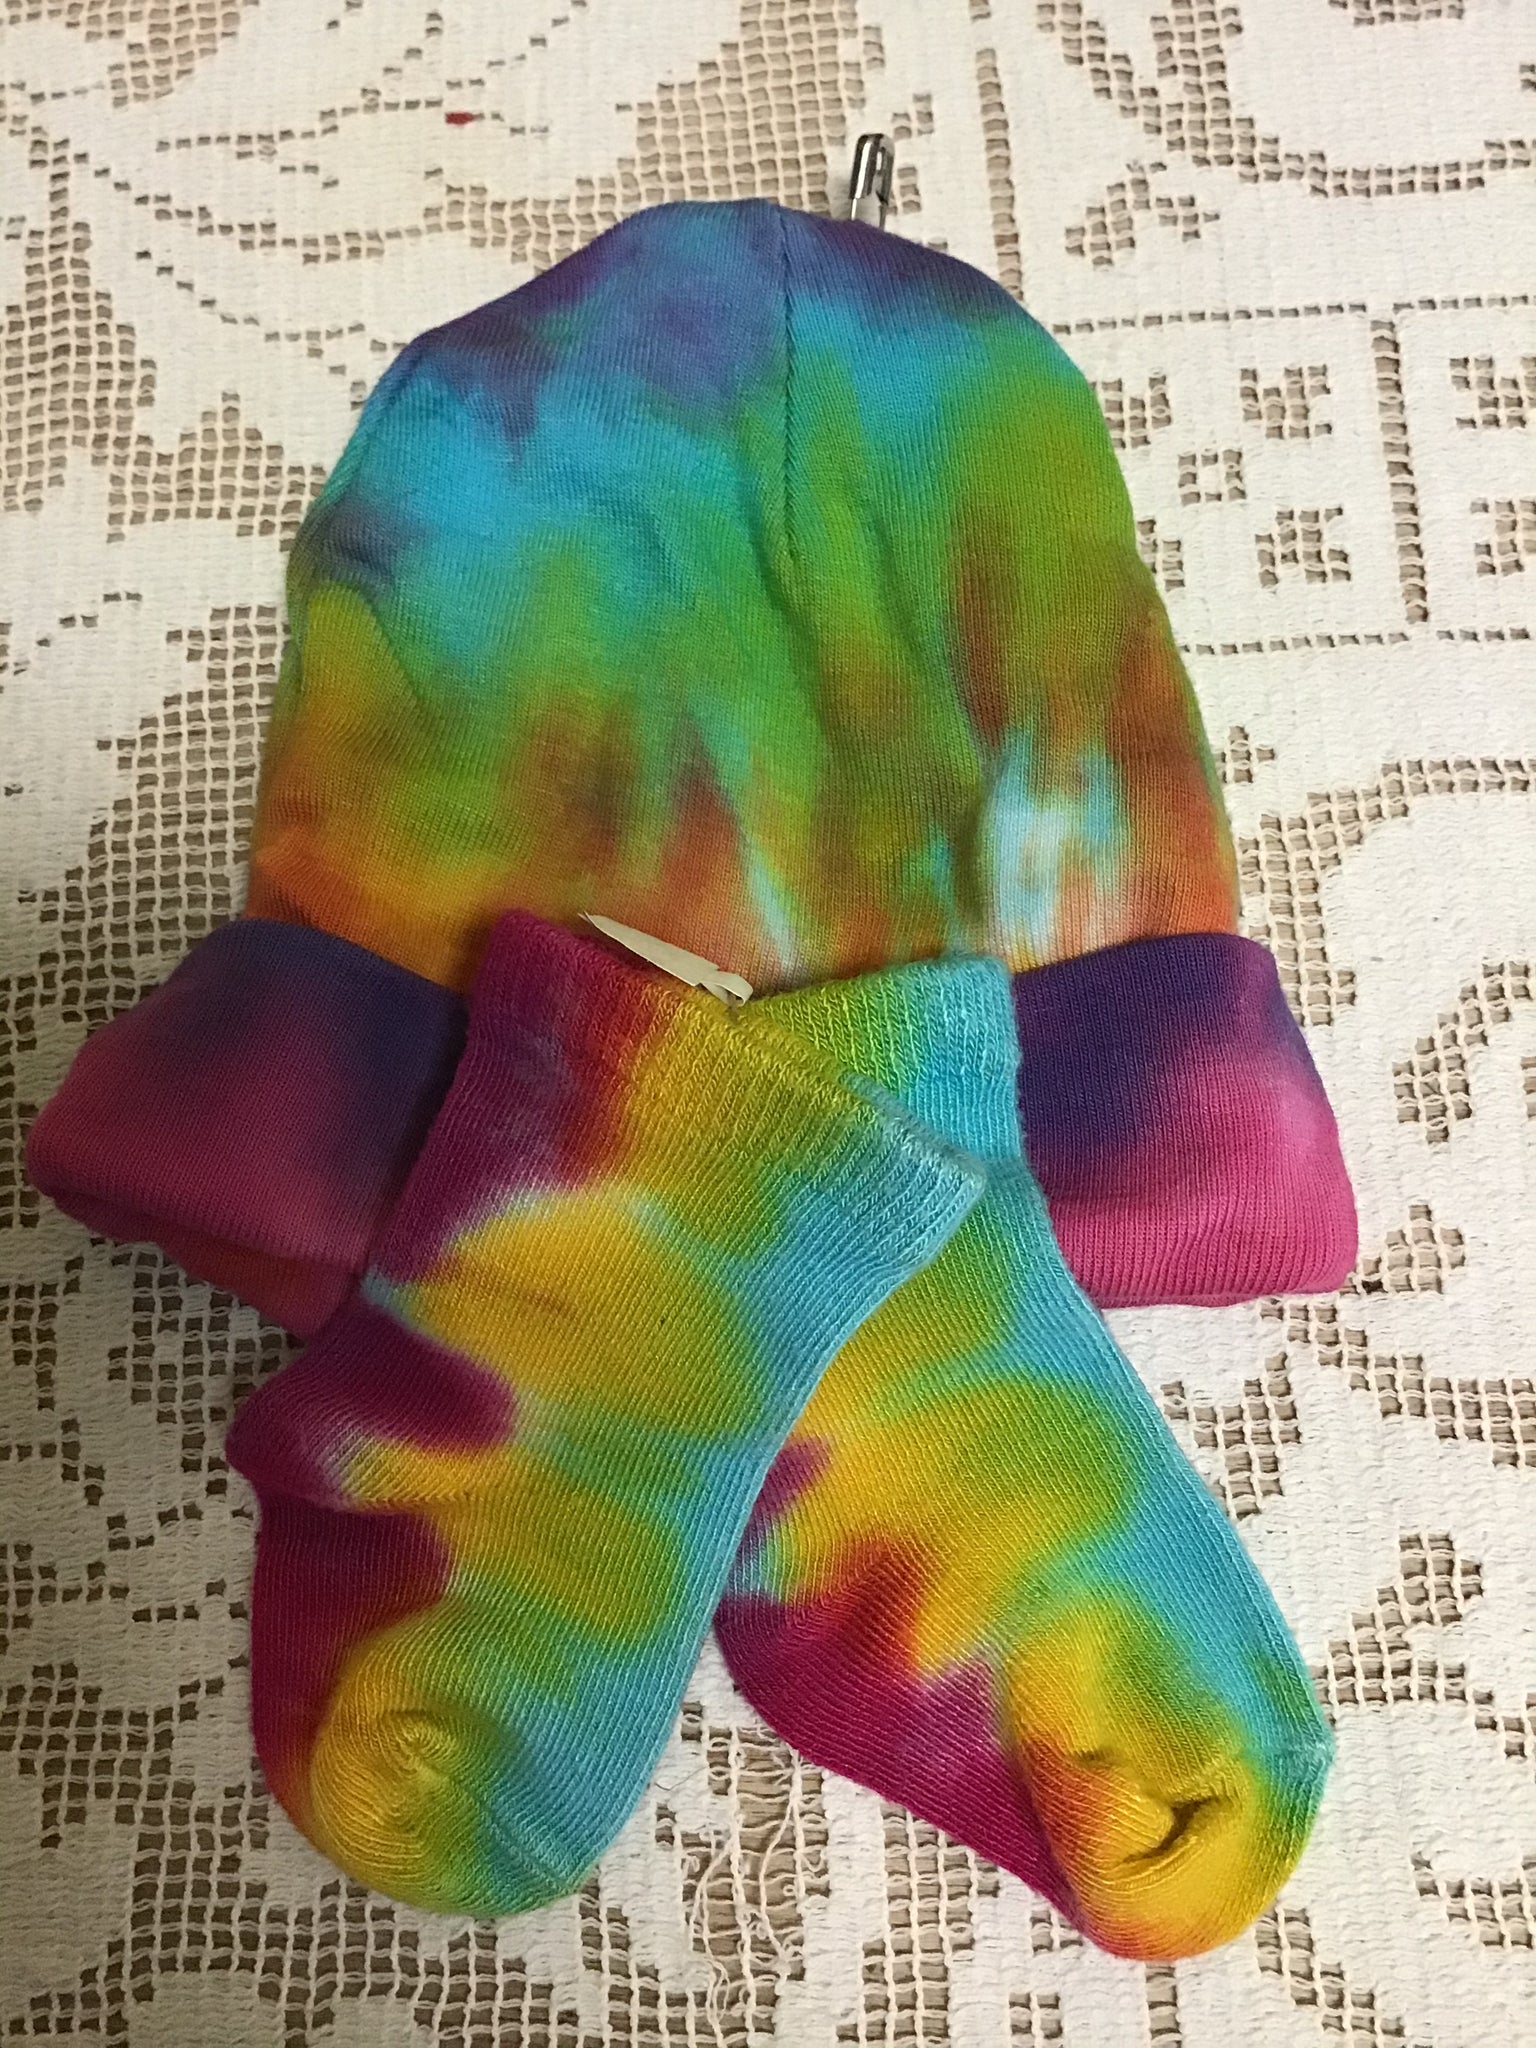 Tie dye baby hat and socks